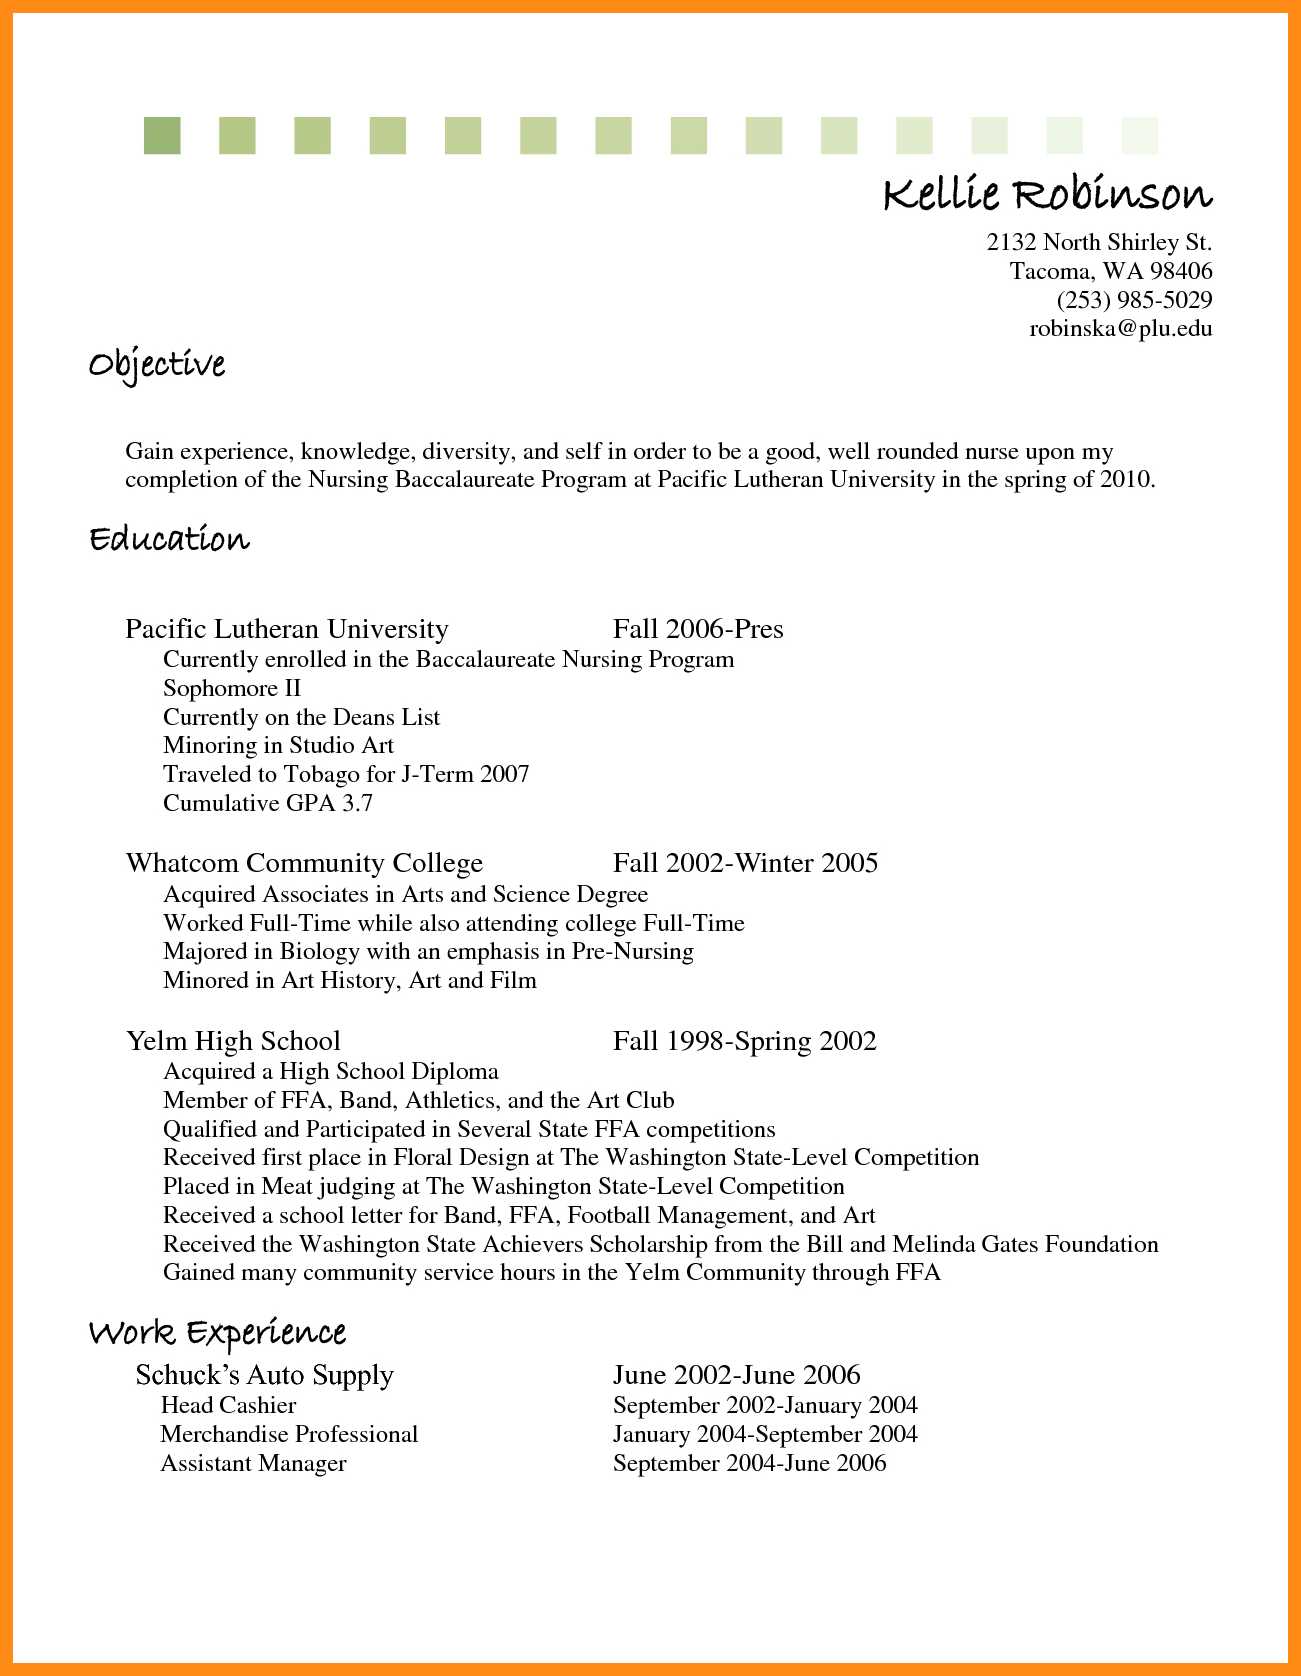 Resume Objective Example Biology Resume Objective Examples Retail Resume Template Image Job Objectives New Sales Associate resume objective example|wikiresume.com